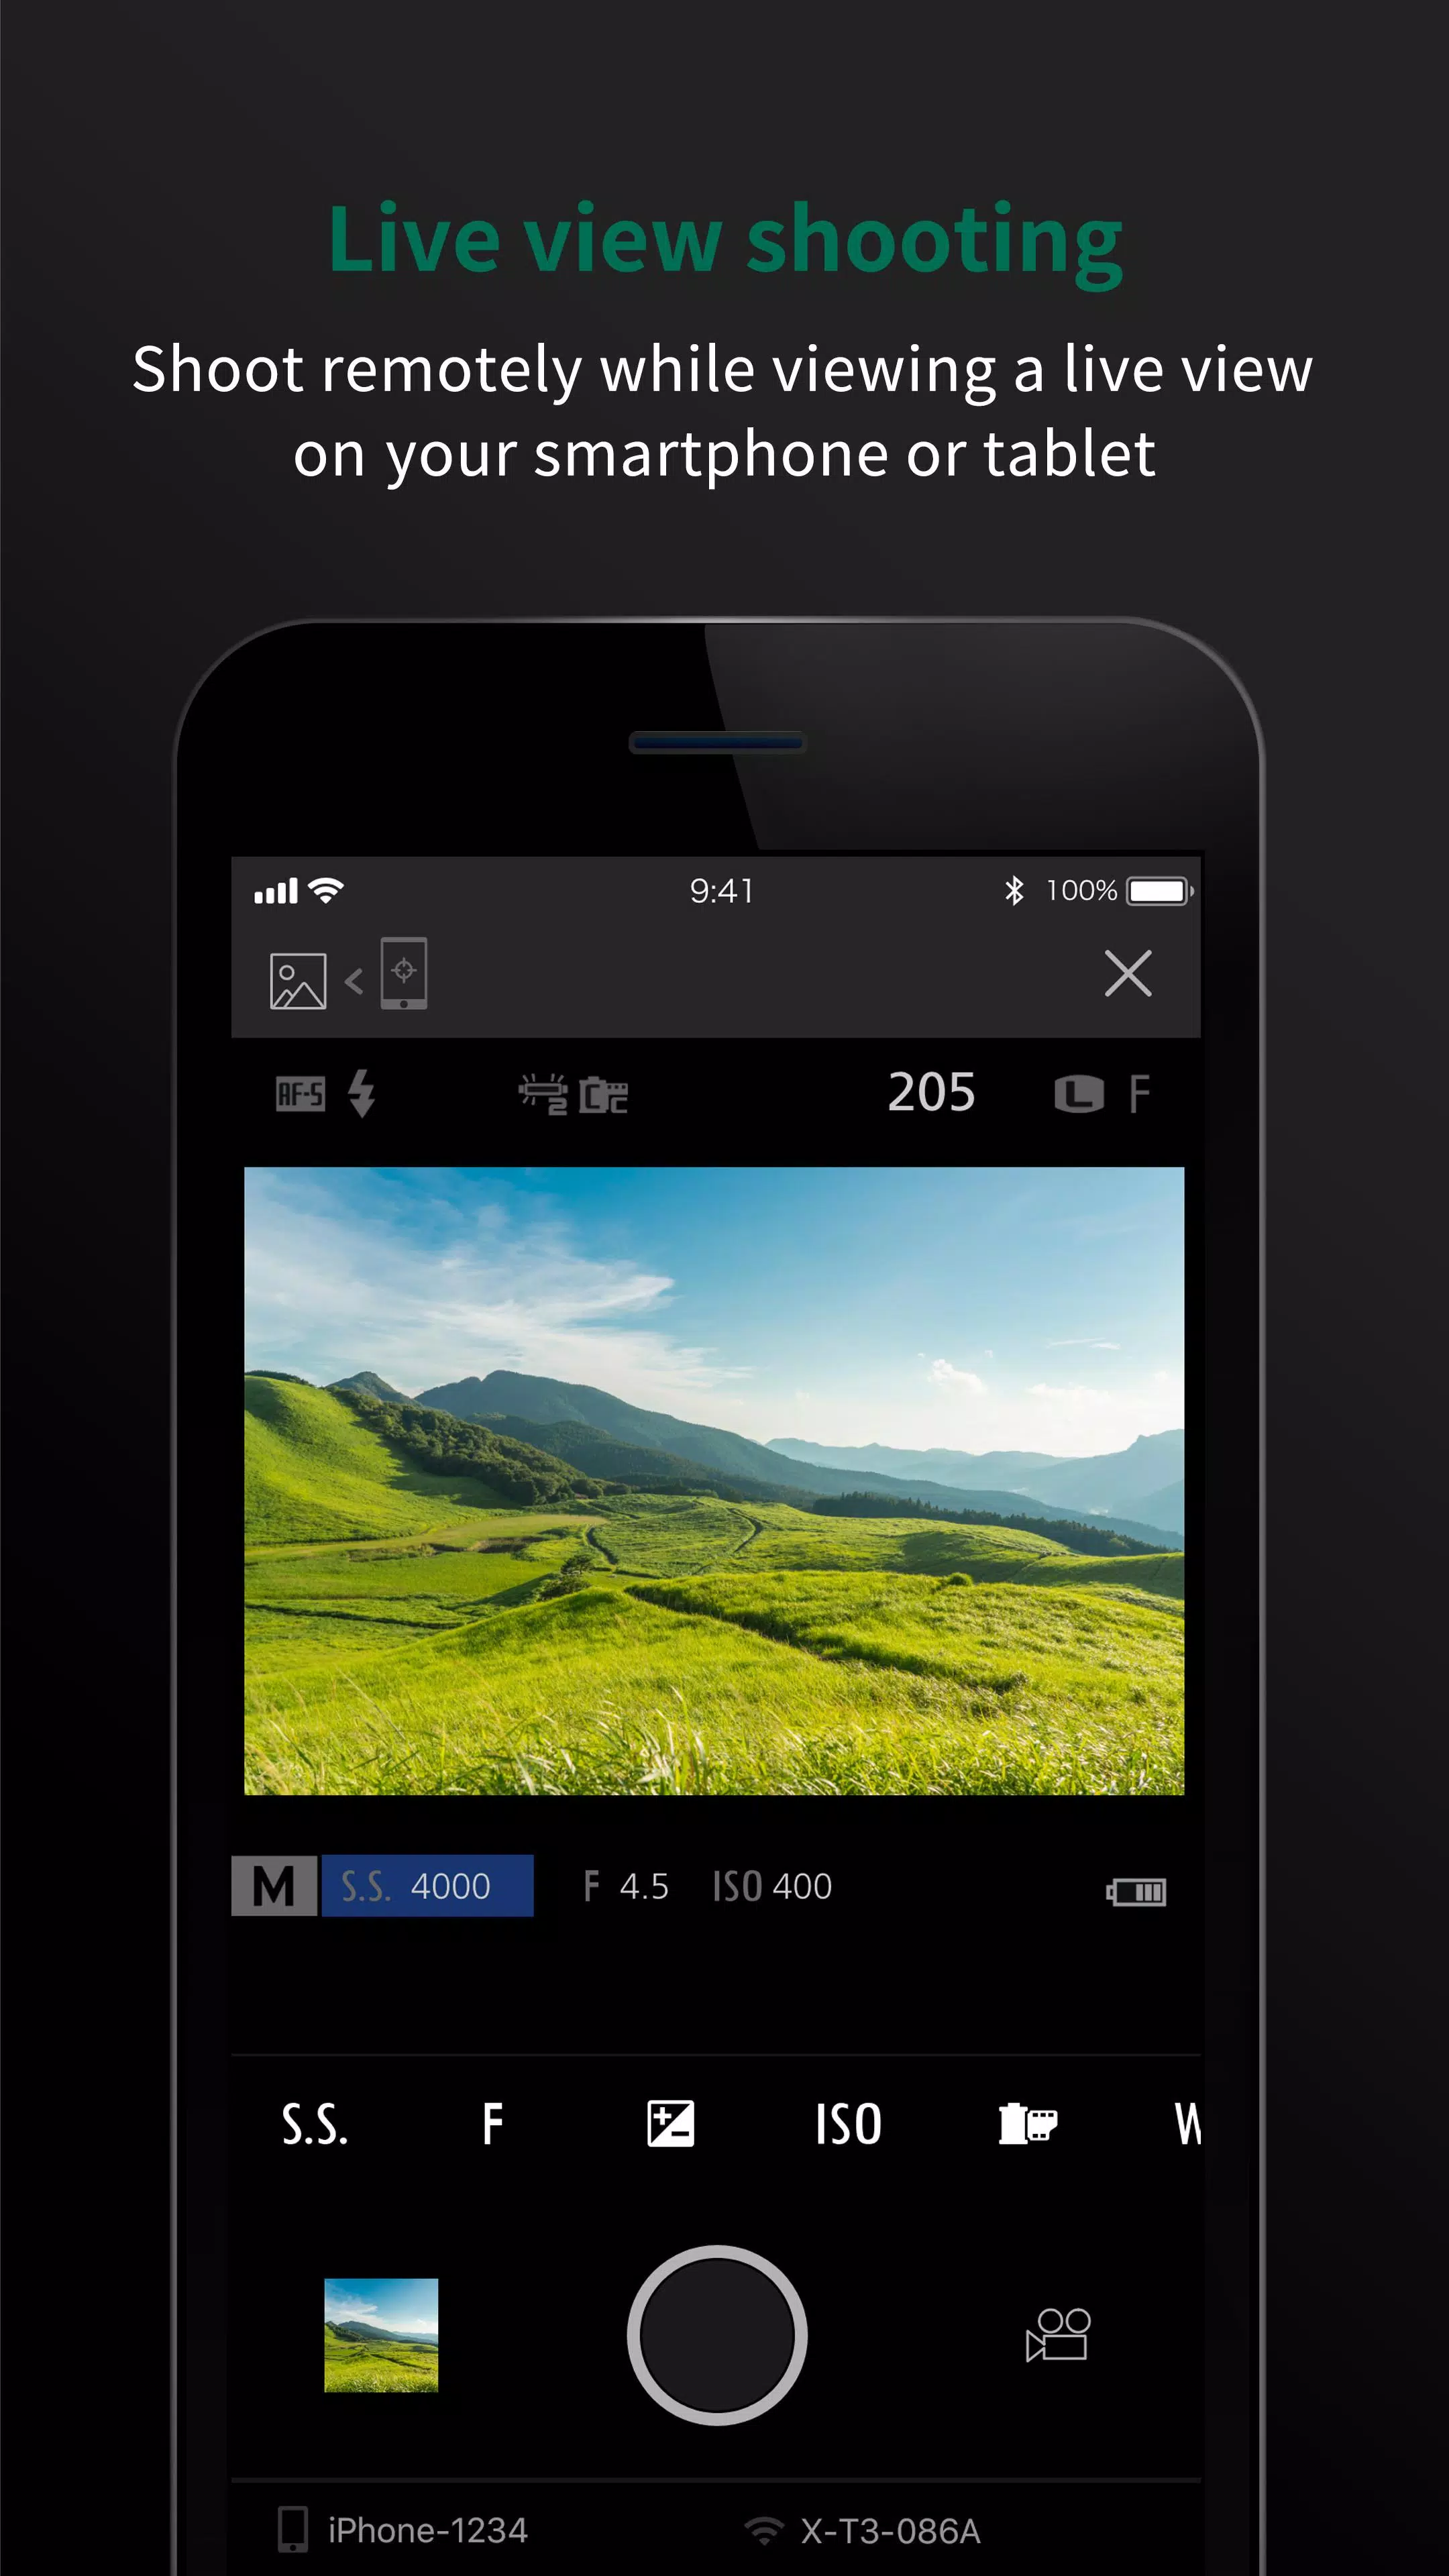 FUJIFILM Camera Remote APK for Android Download